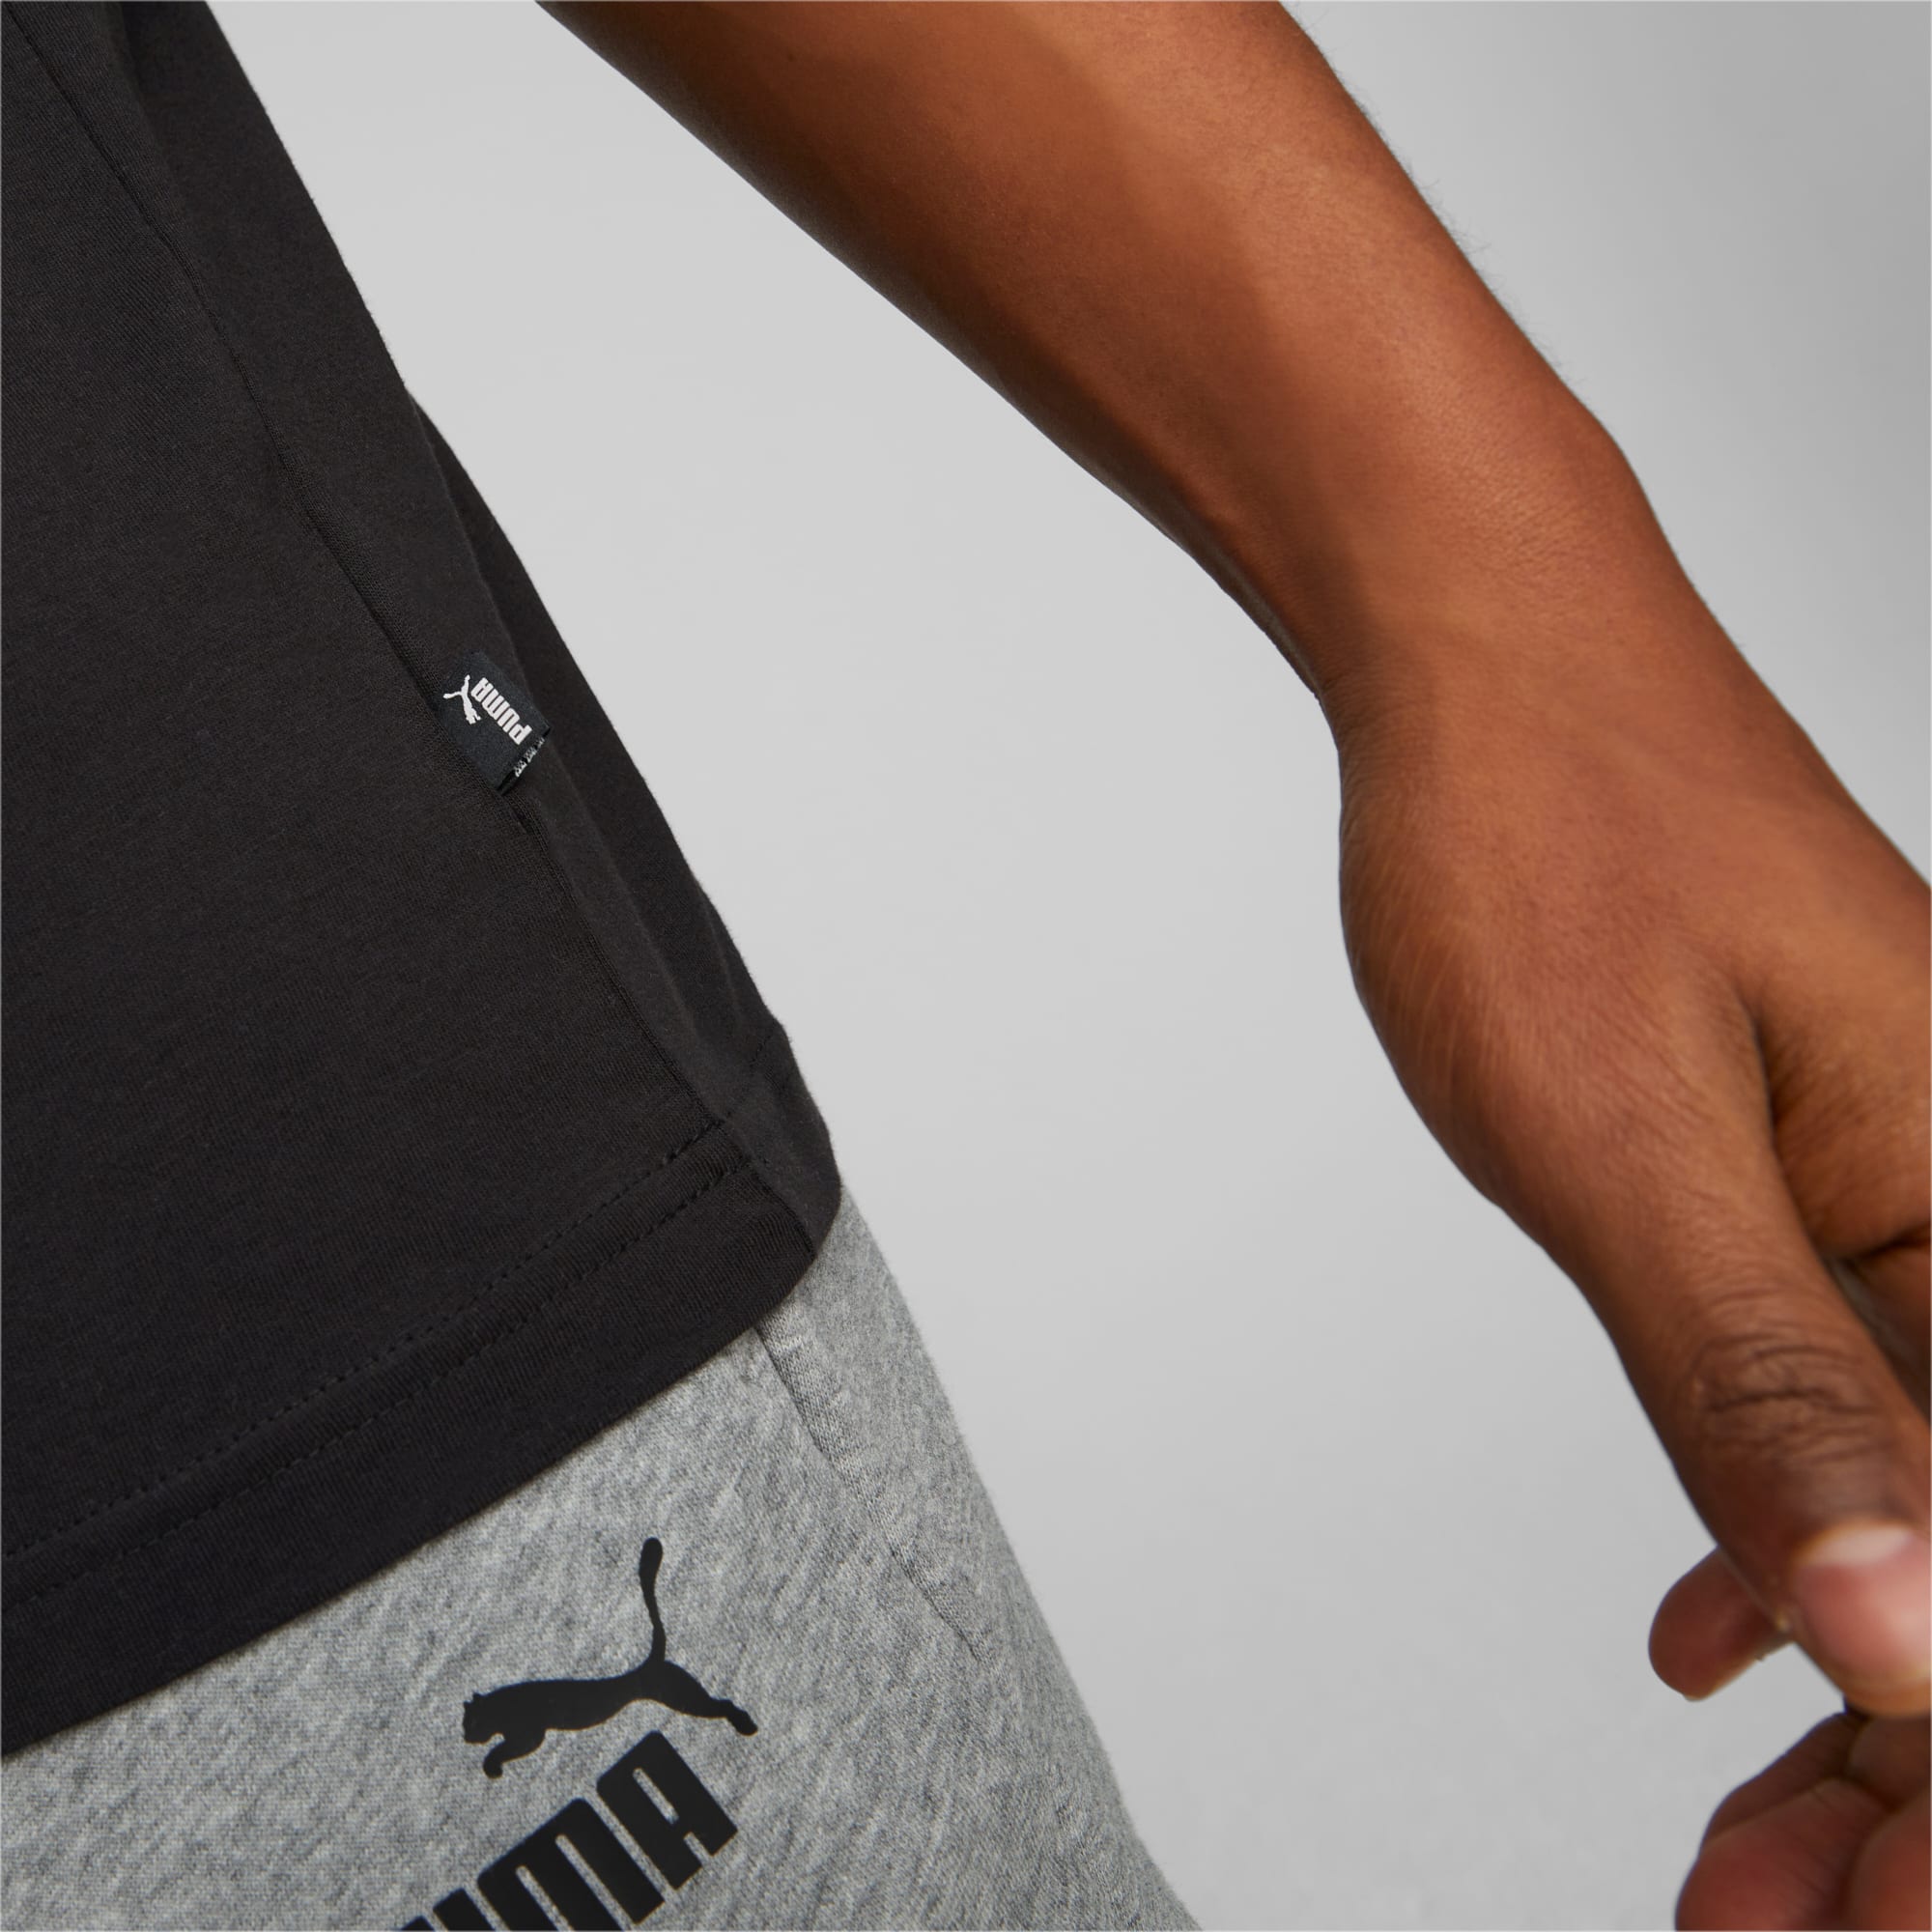 PUMA Essentials Logo Men's T-Shirt, Black, Size XS, Clothing